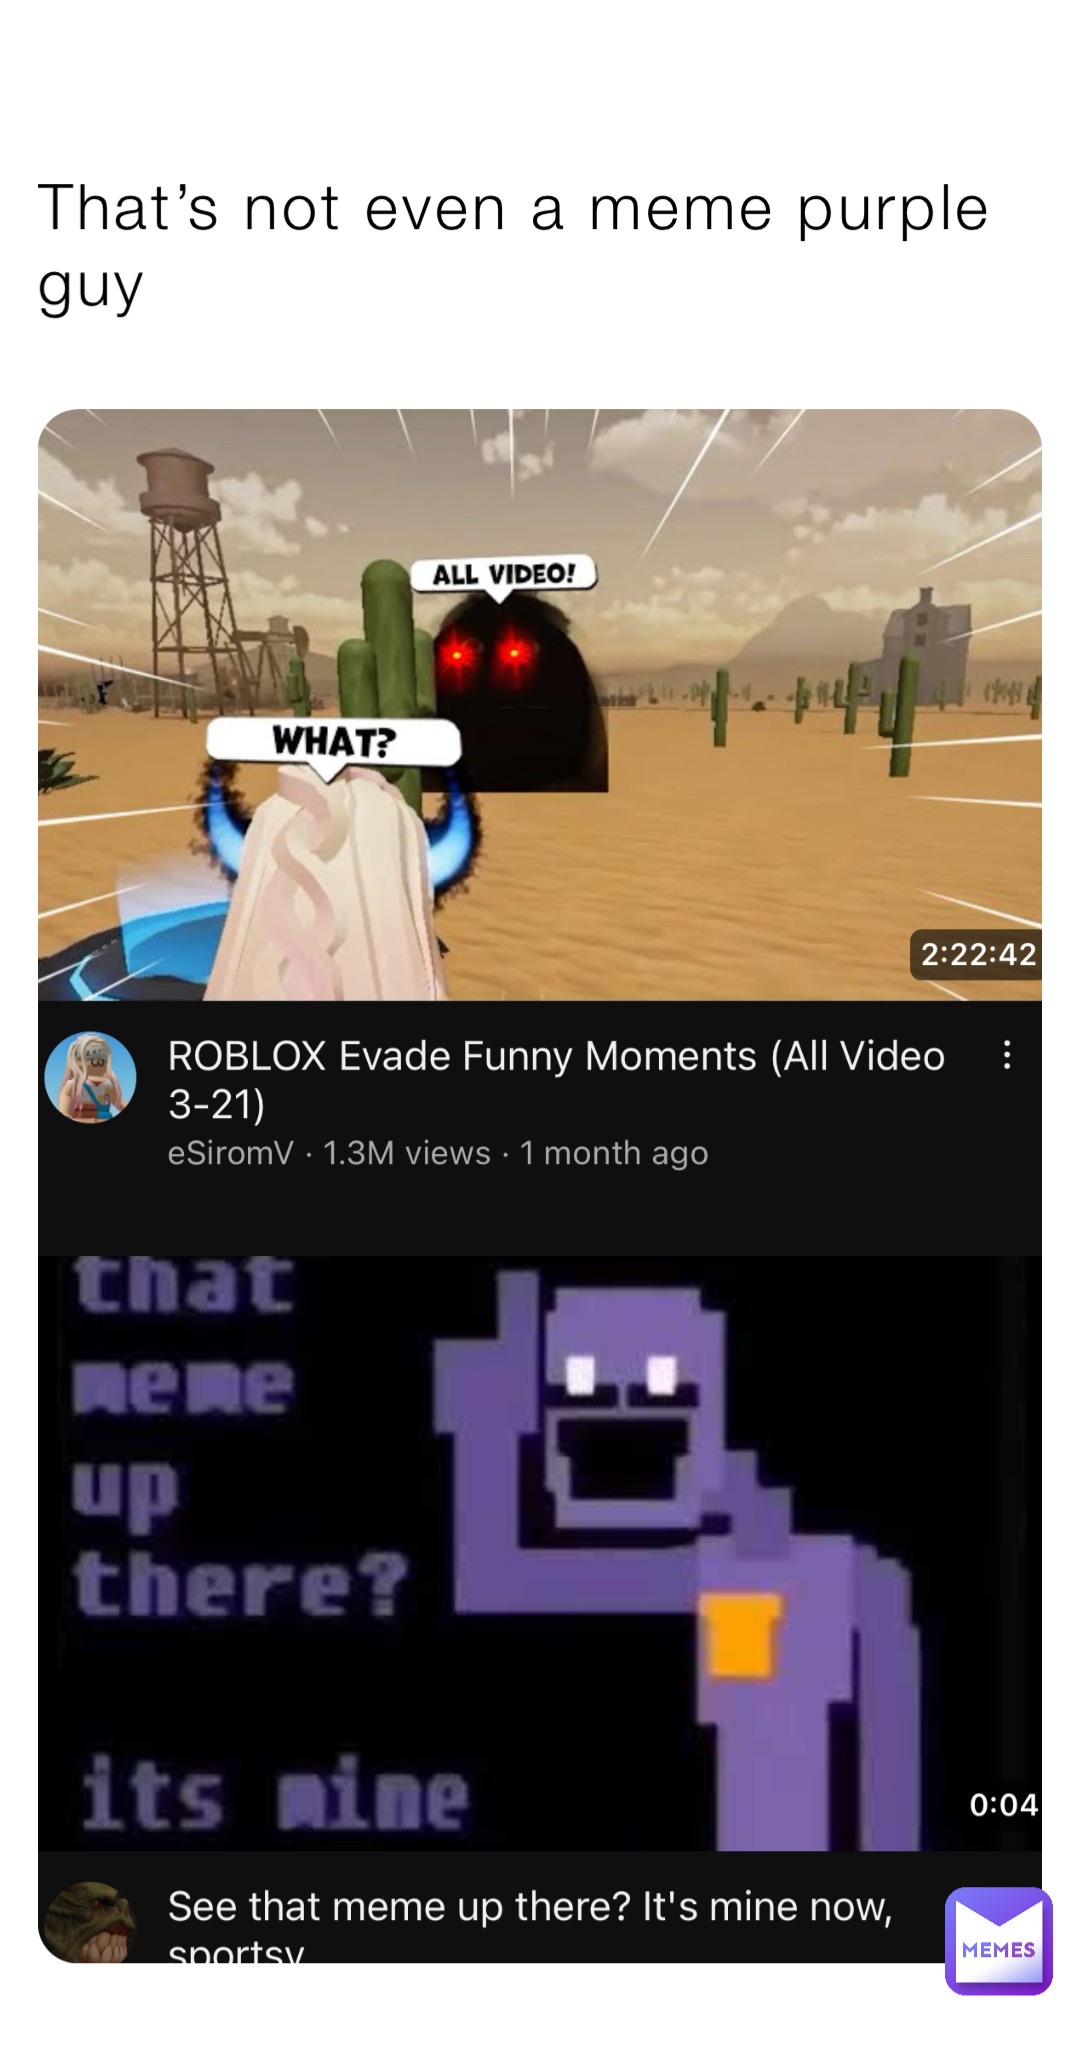 That’s not even a meme purple guy